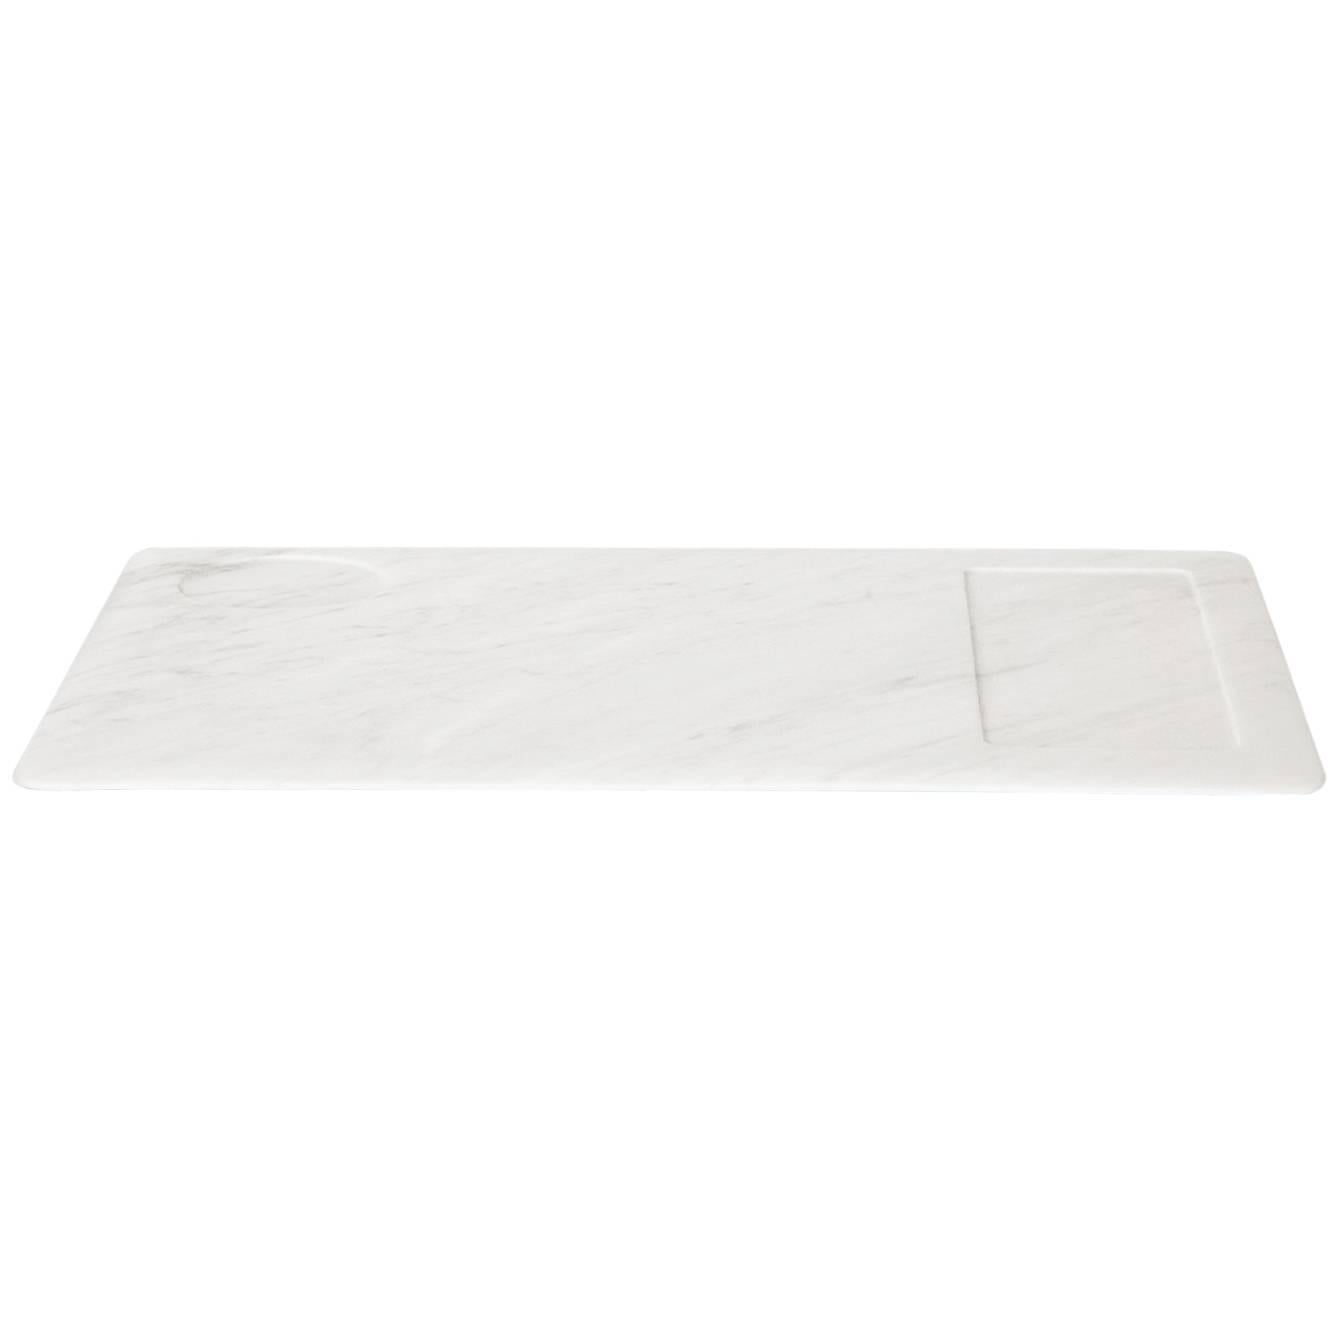 New Modern Tray in White Carrara Marble, creator Studioformart